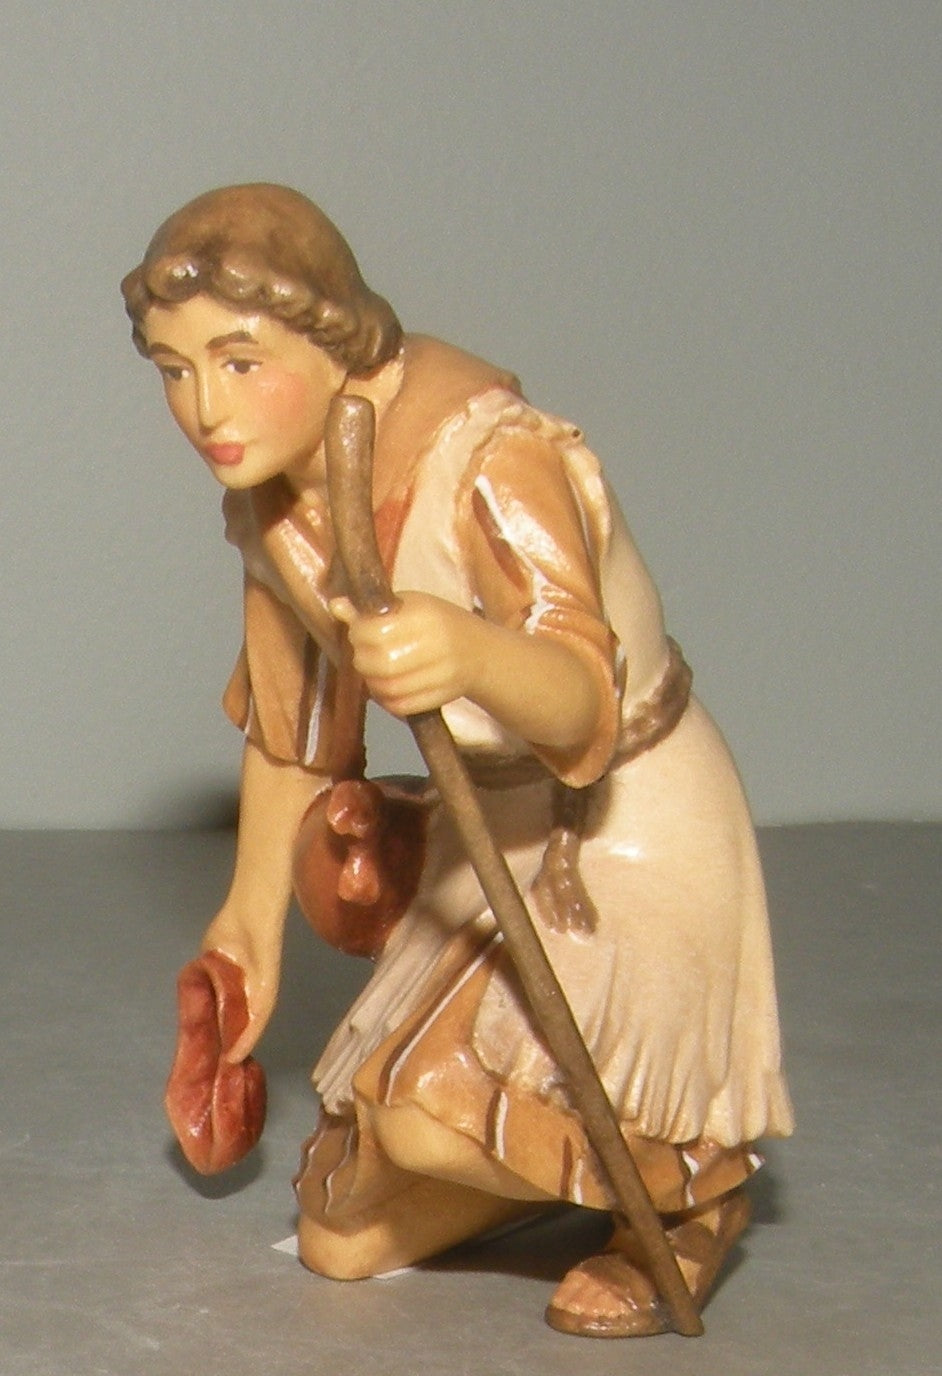 Shepherd kneeling with walking - stick Venetian Nativity